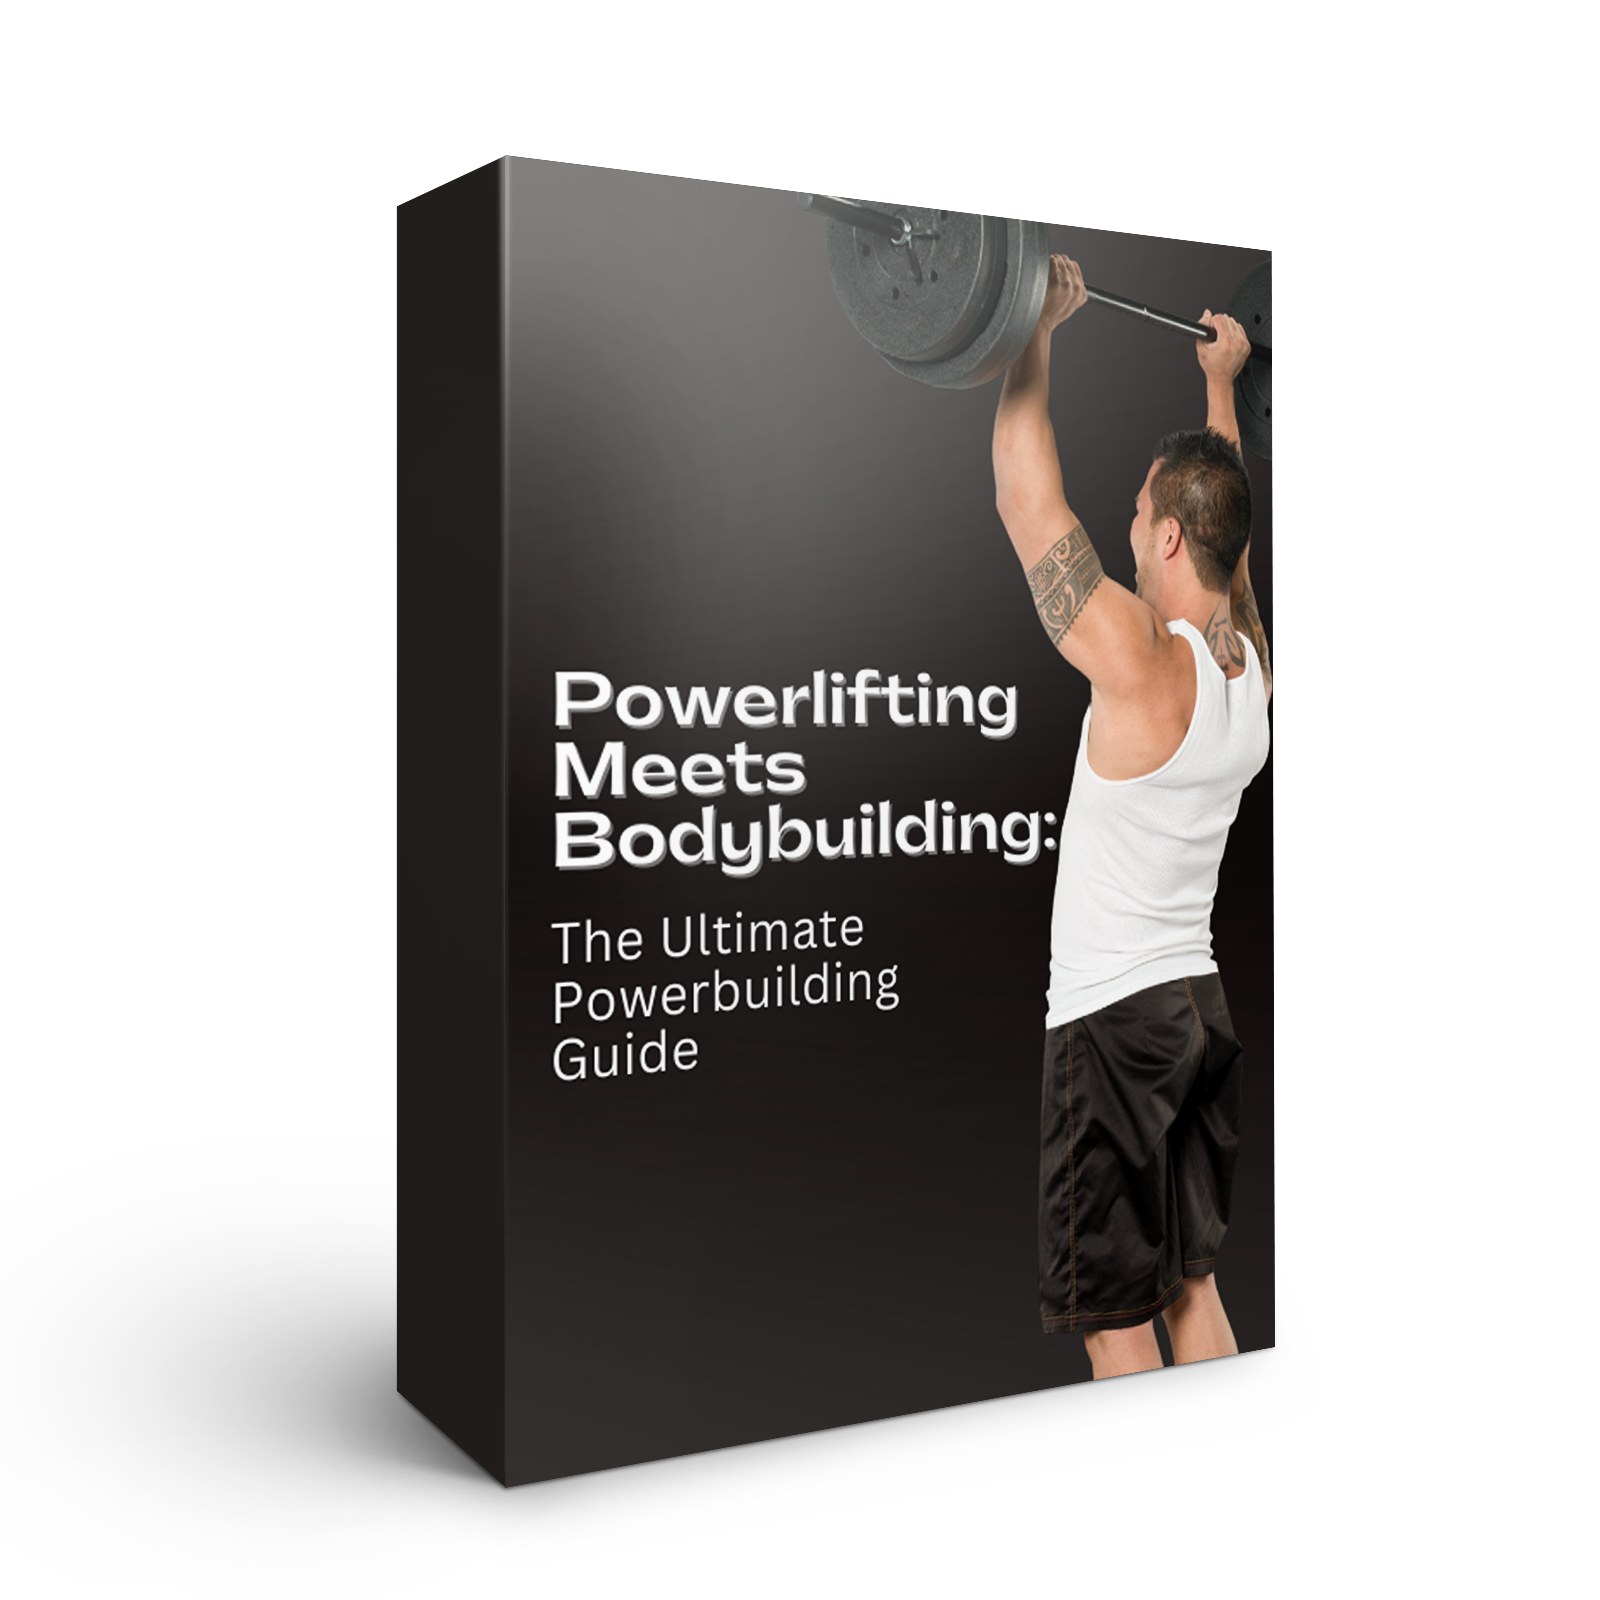 Powerlifting meets bodybuilding